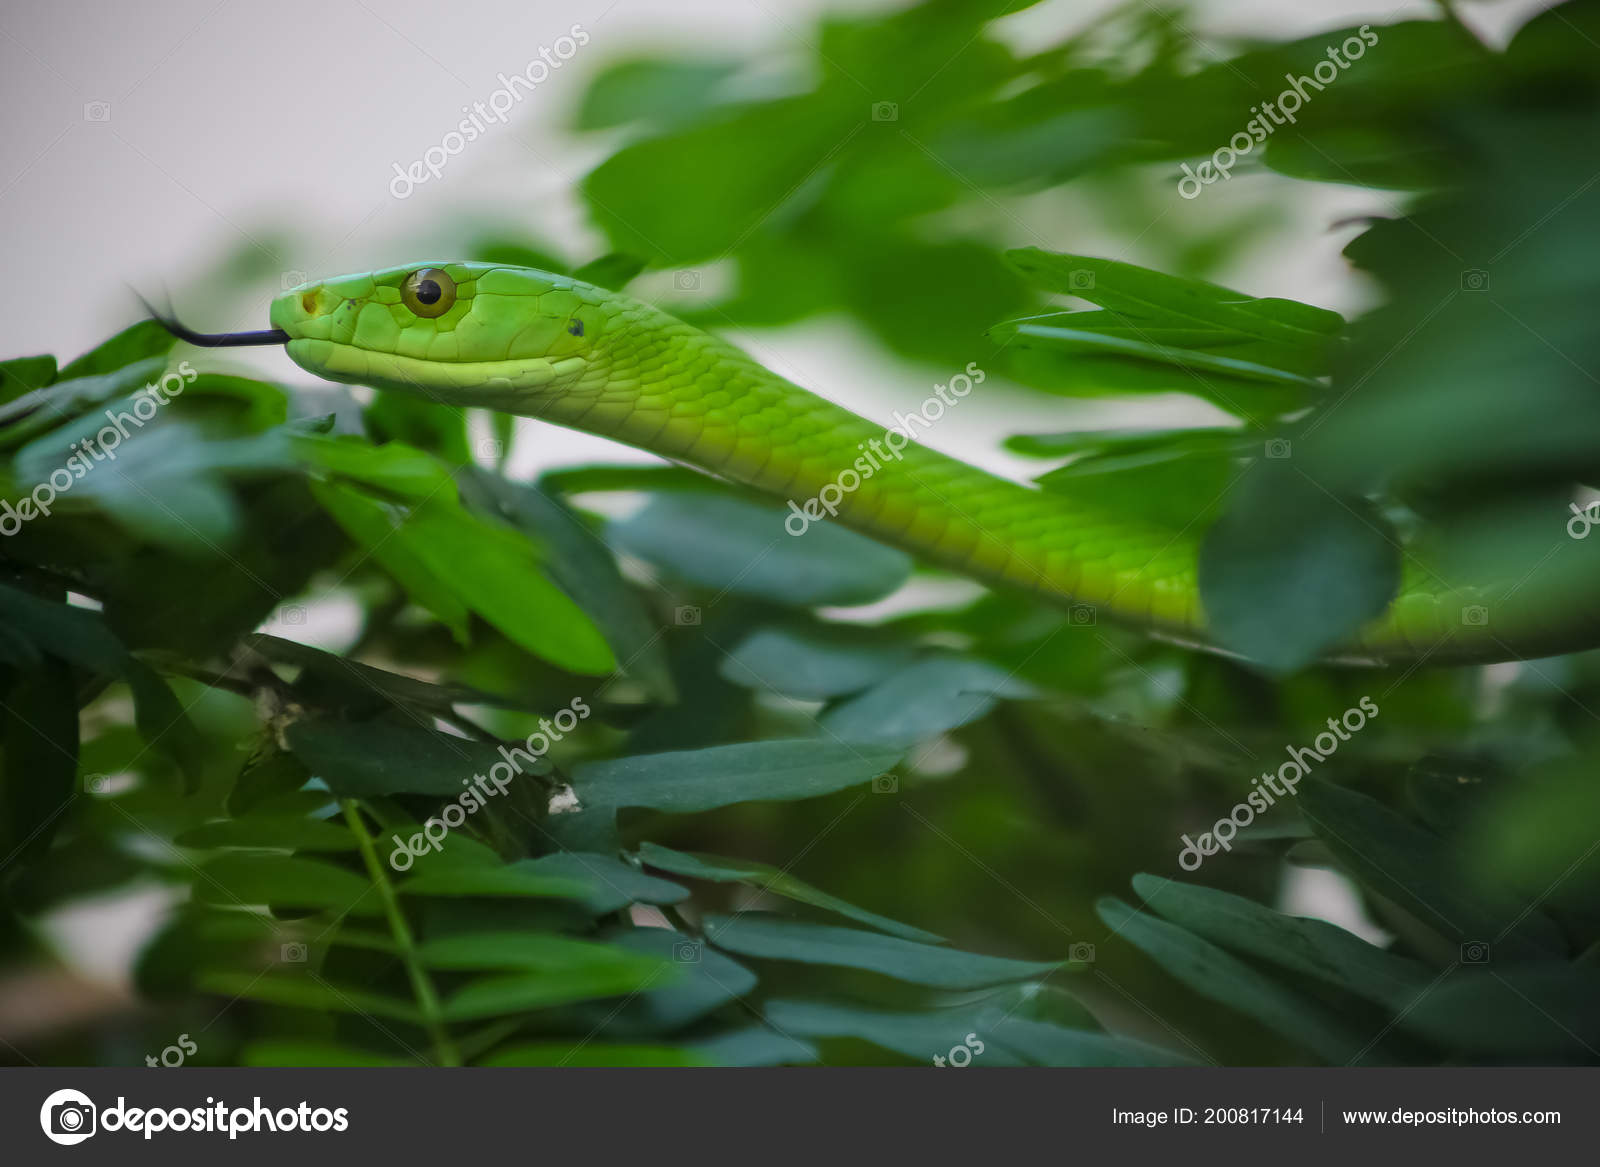 Venomous Green Mamba Tree Snake South African Wildlife Preserve